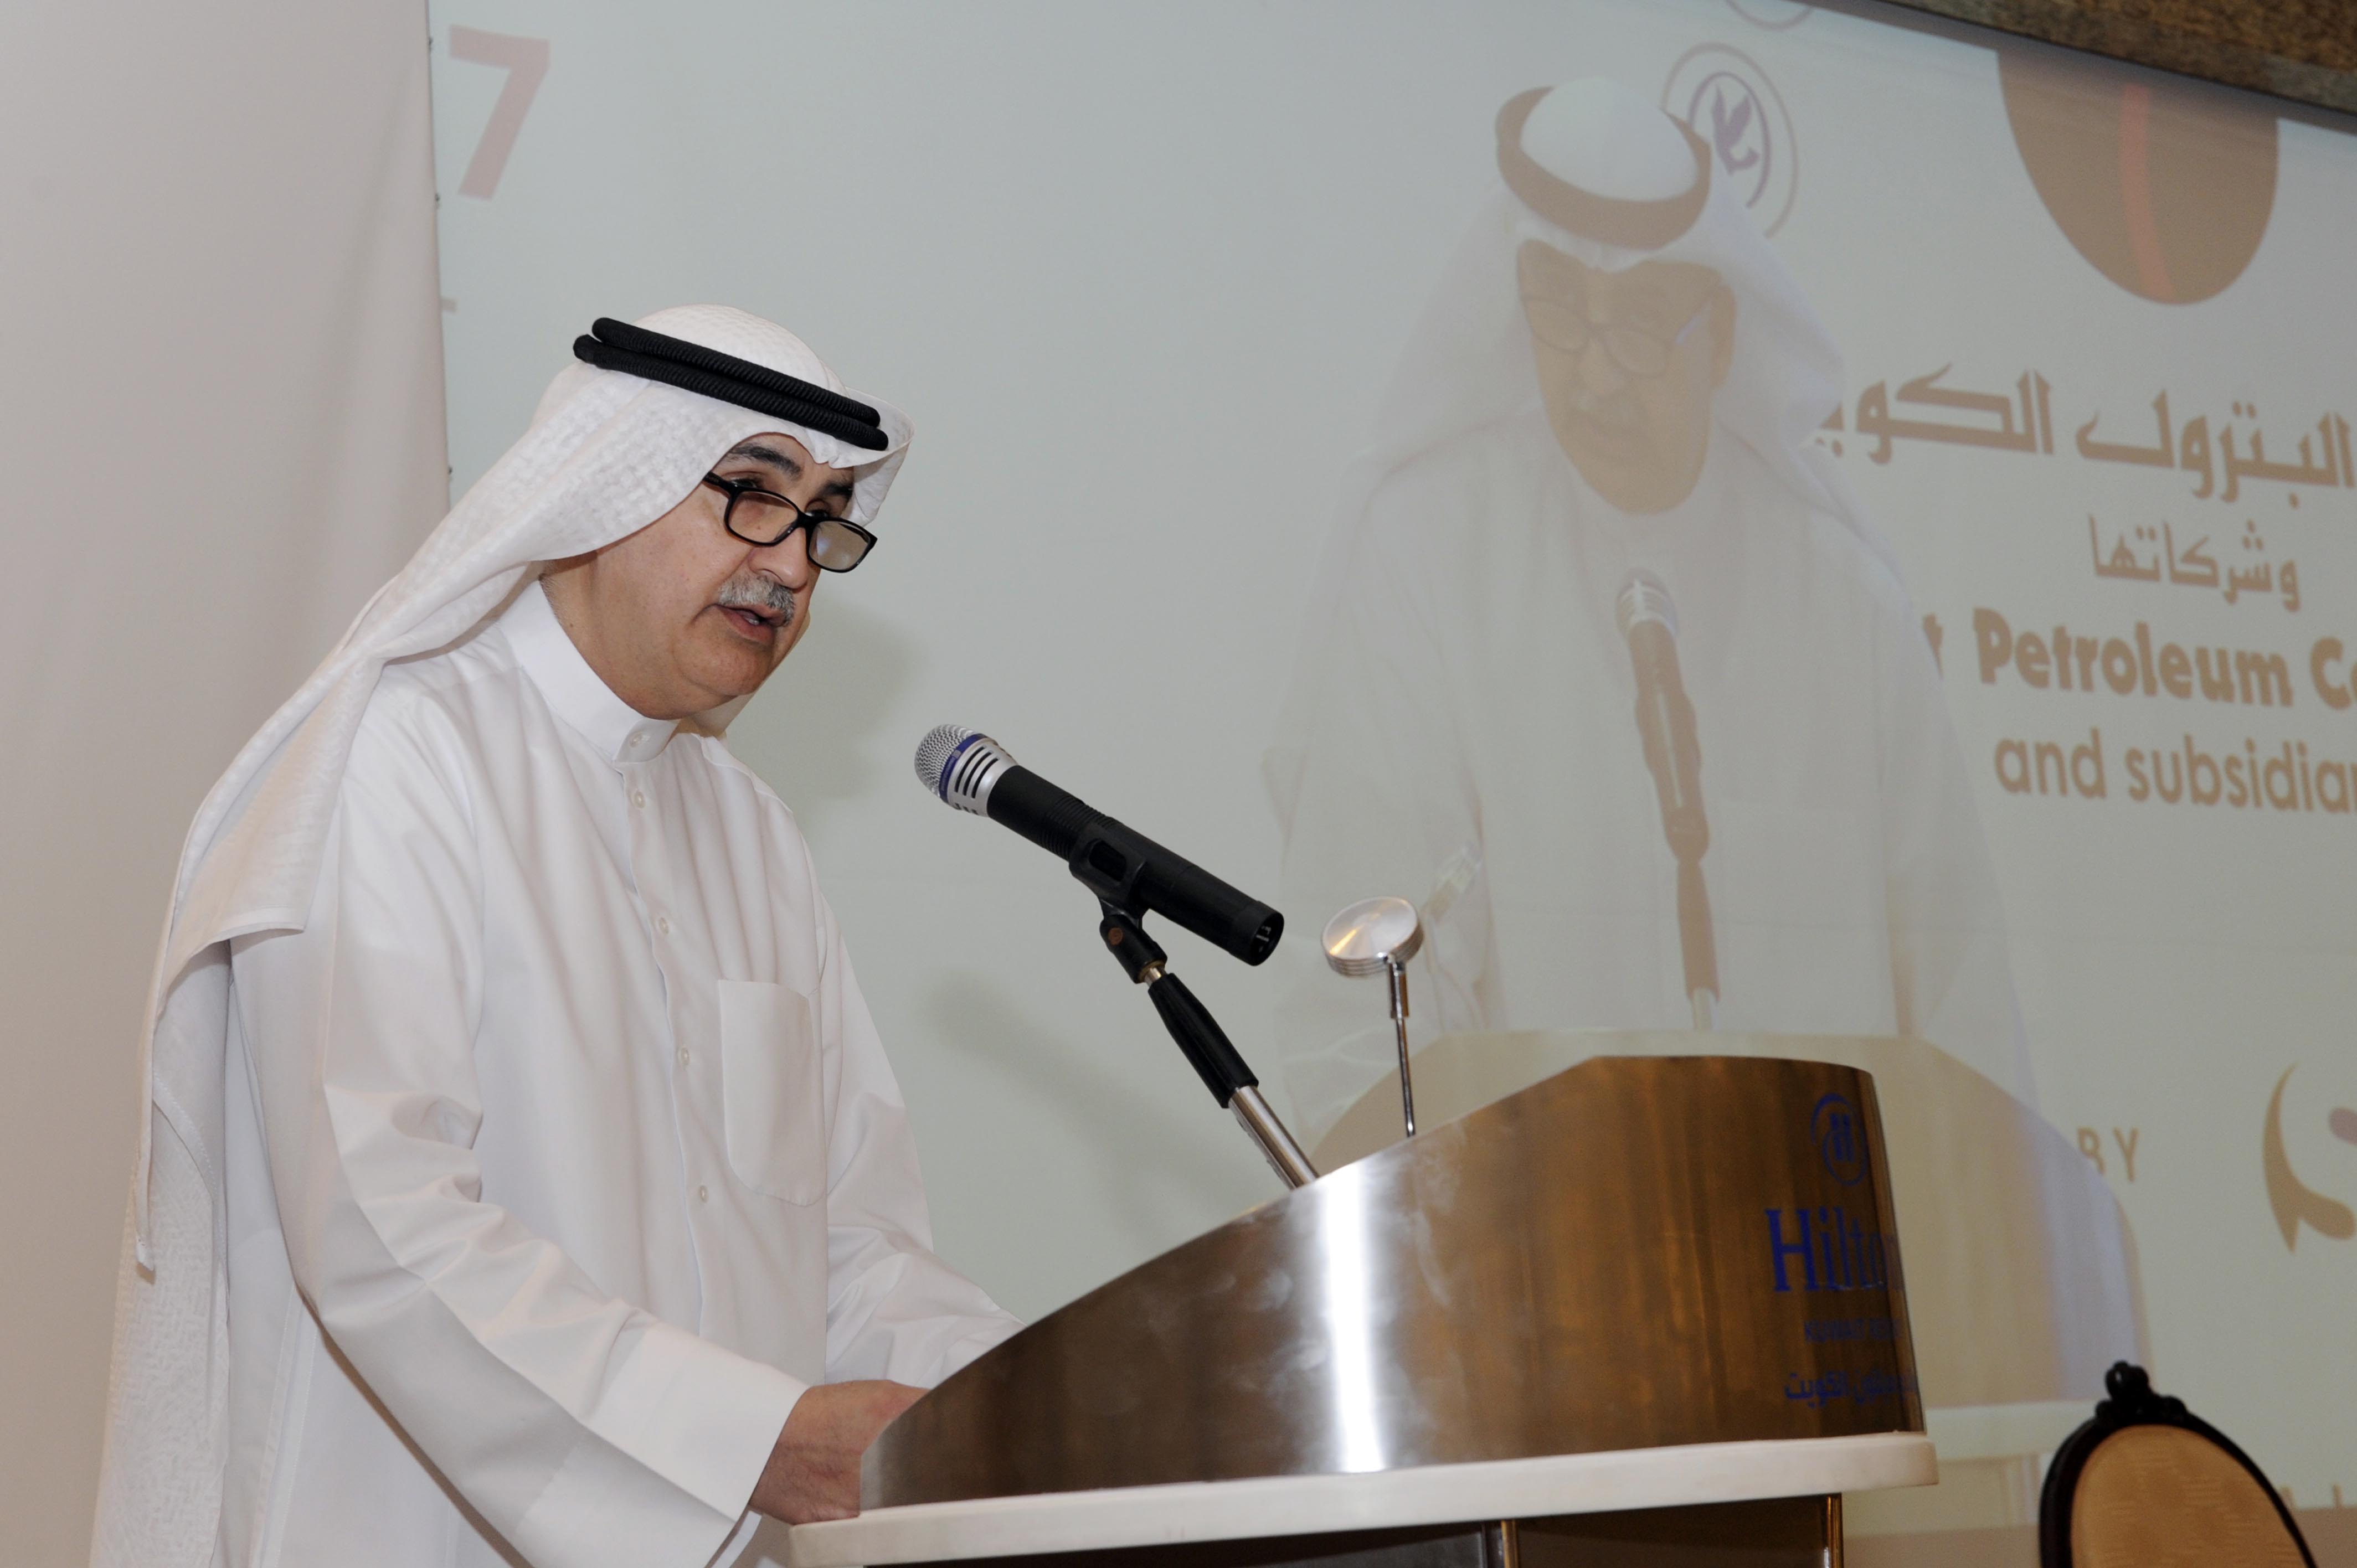 CEO of Kuwait Petroleum Corporation (KPC) Nezar Al-Adsani